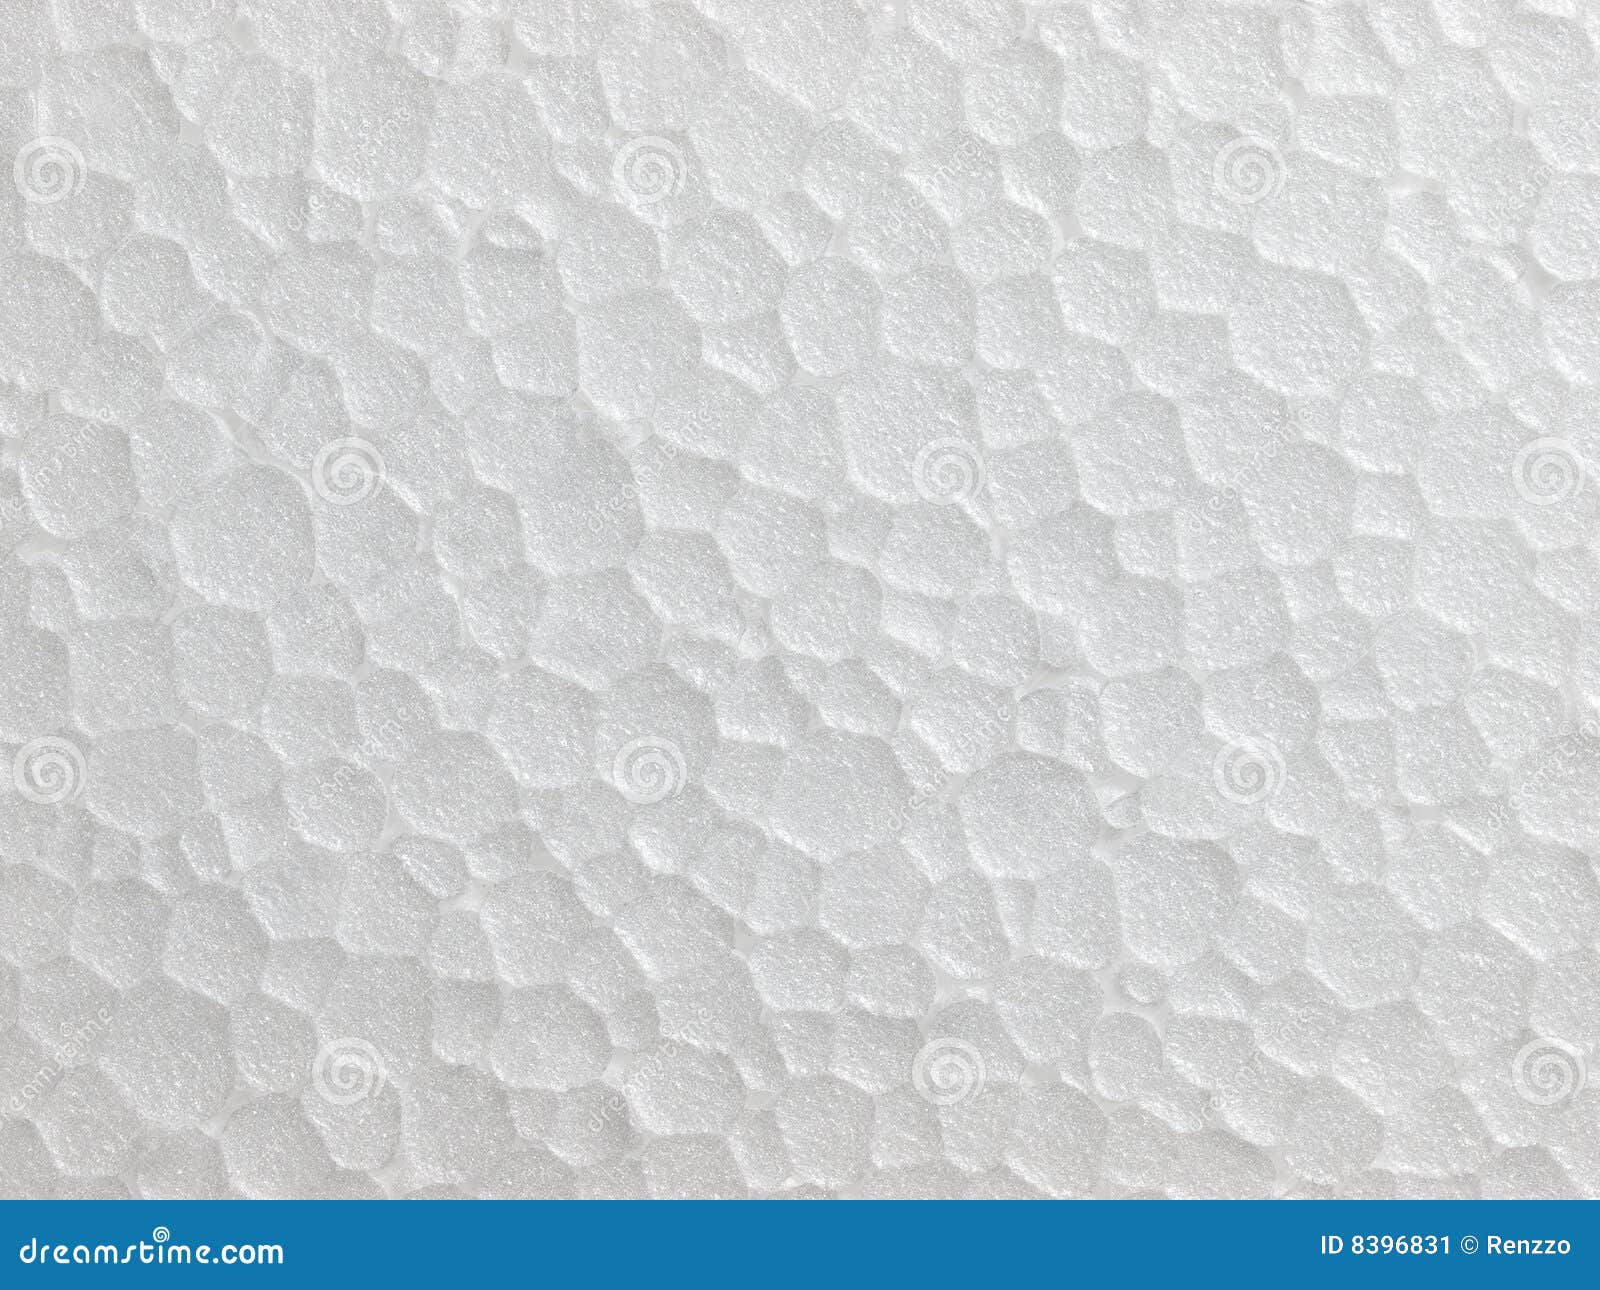 polystyrene foam texture